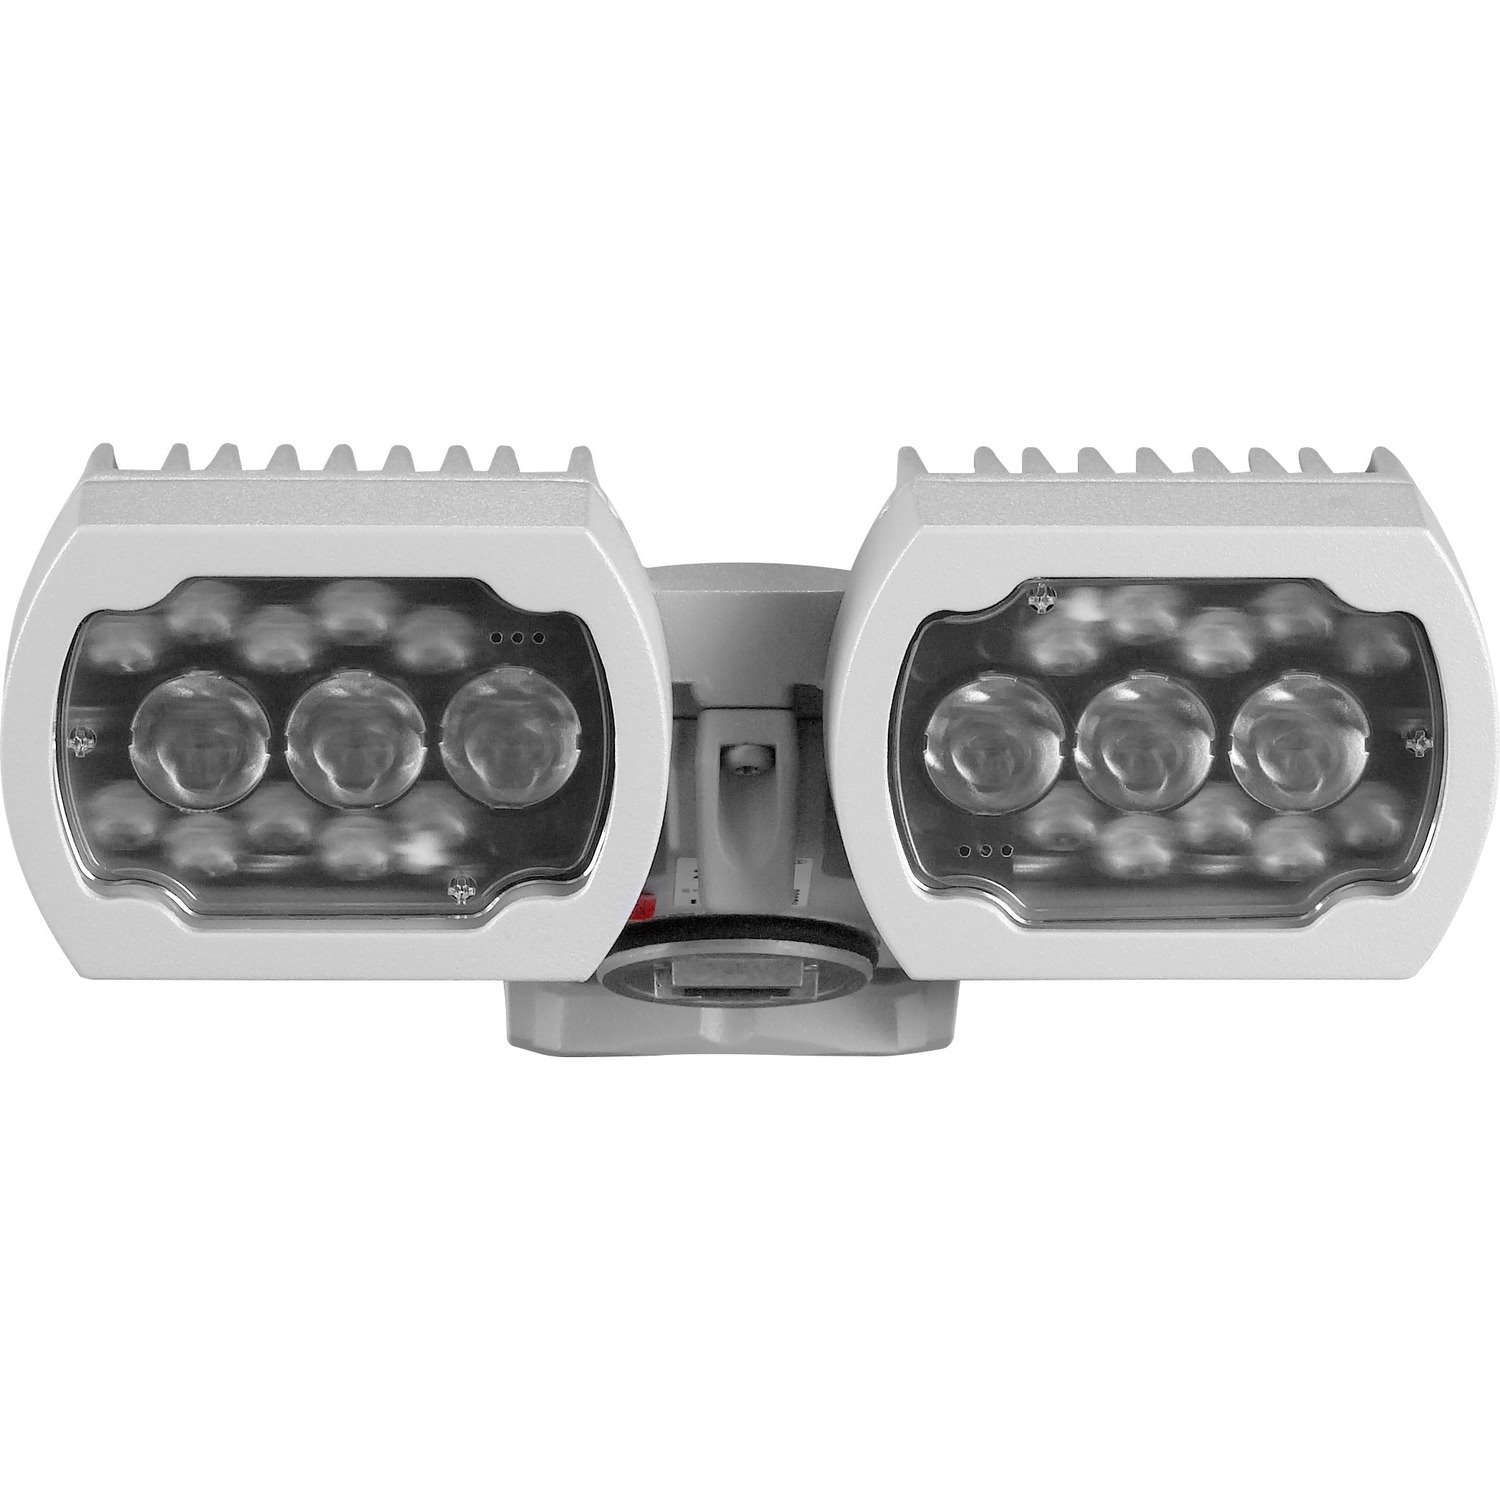 Bosch IR/White Light Illuminator for Network Camera